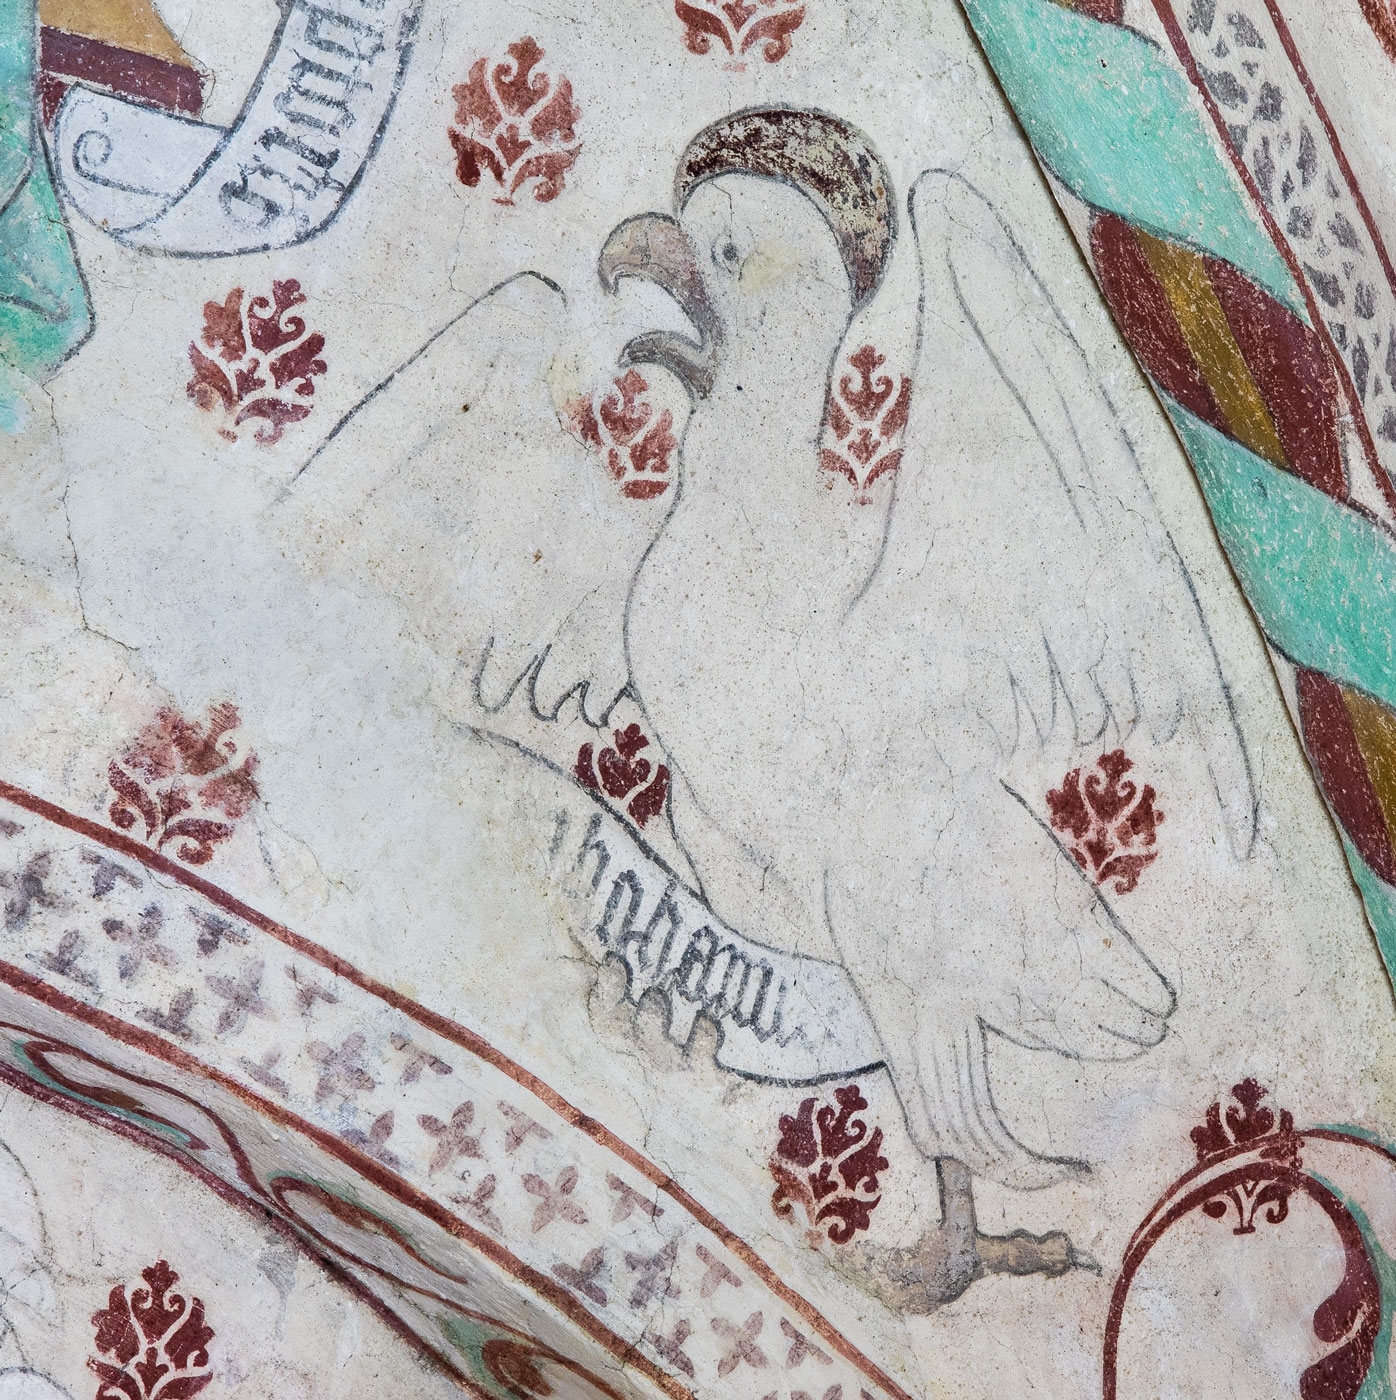 Evangelisten Johannes symbol, örnen - Yttergrans kyrka